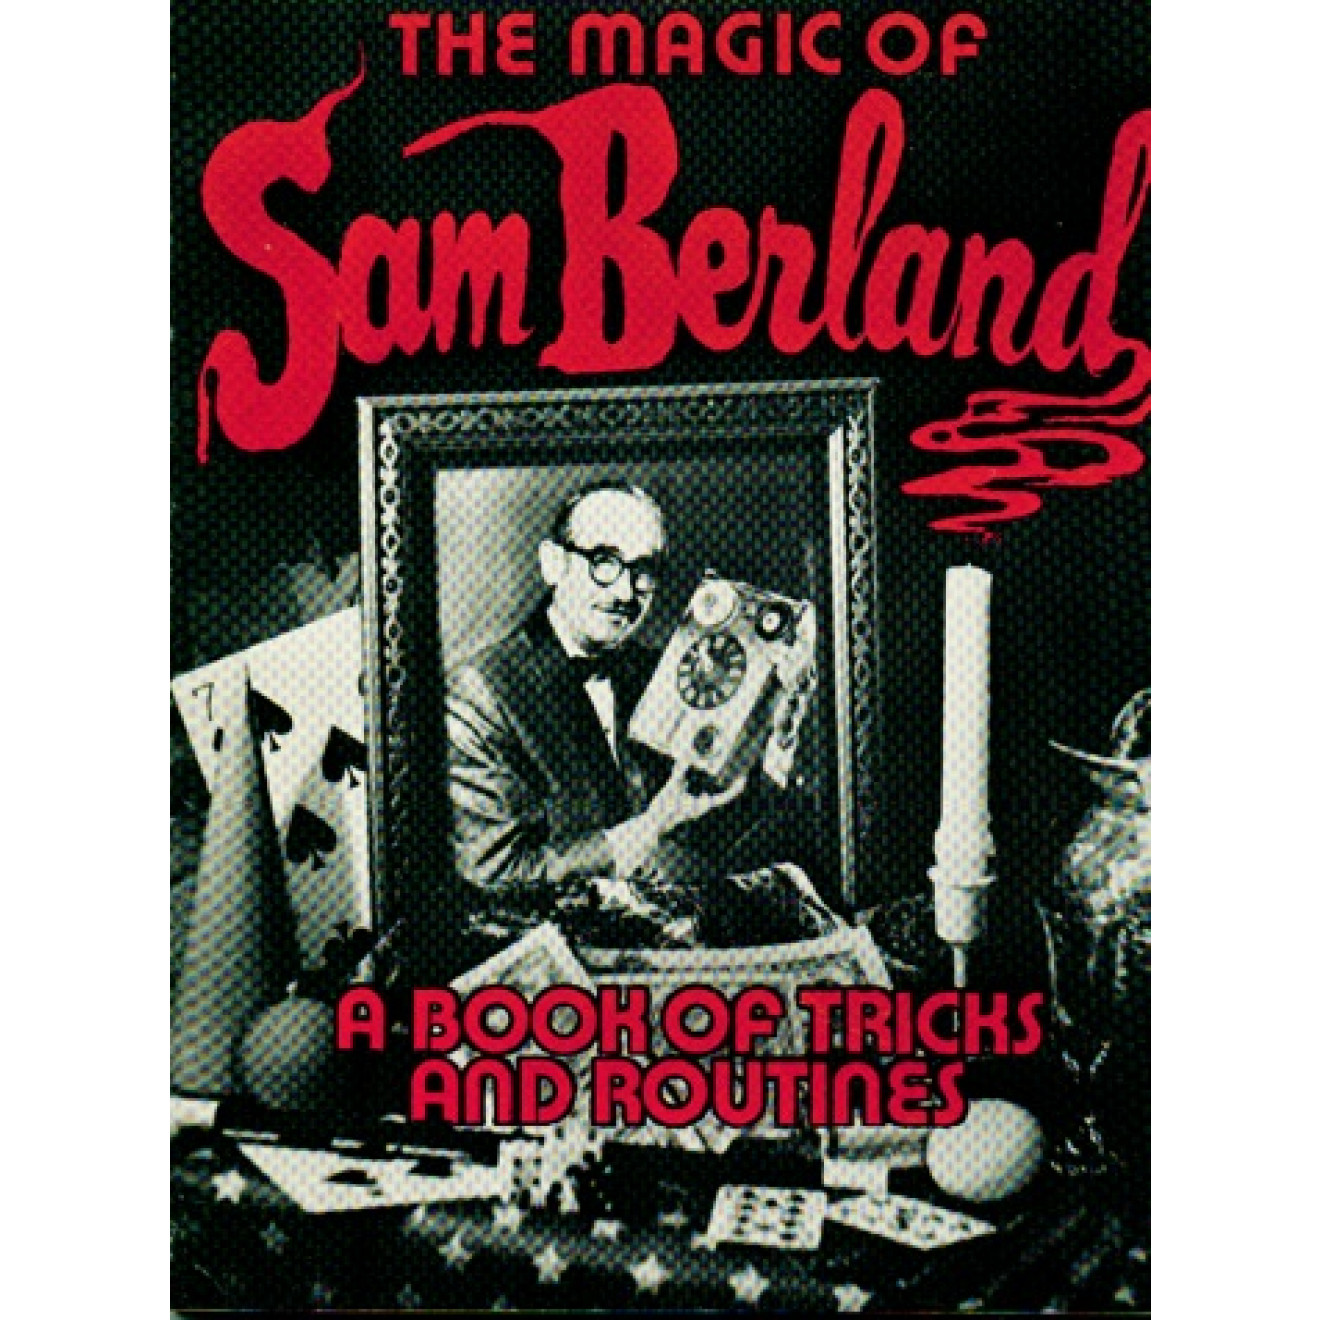 The Magic of Sam Berland